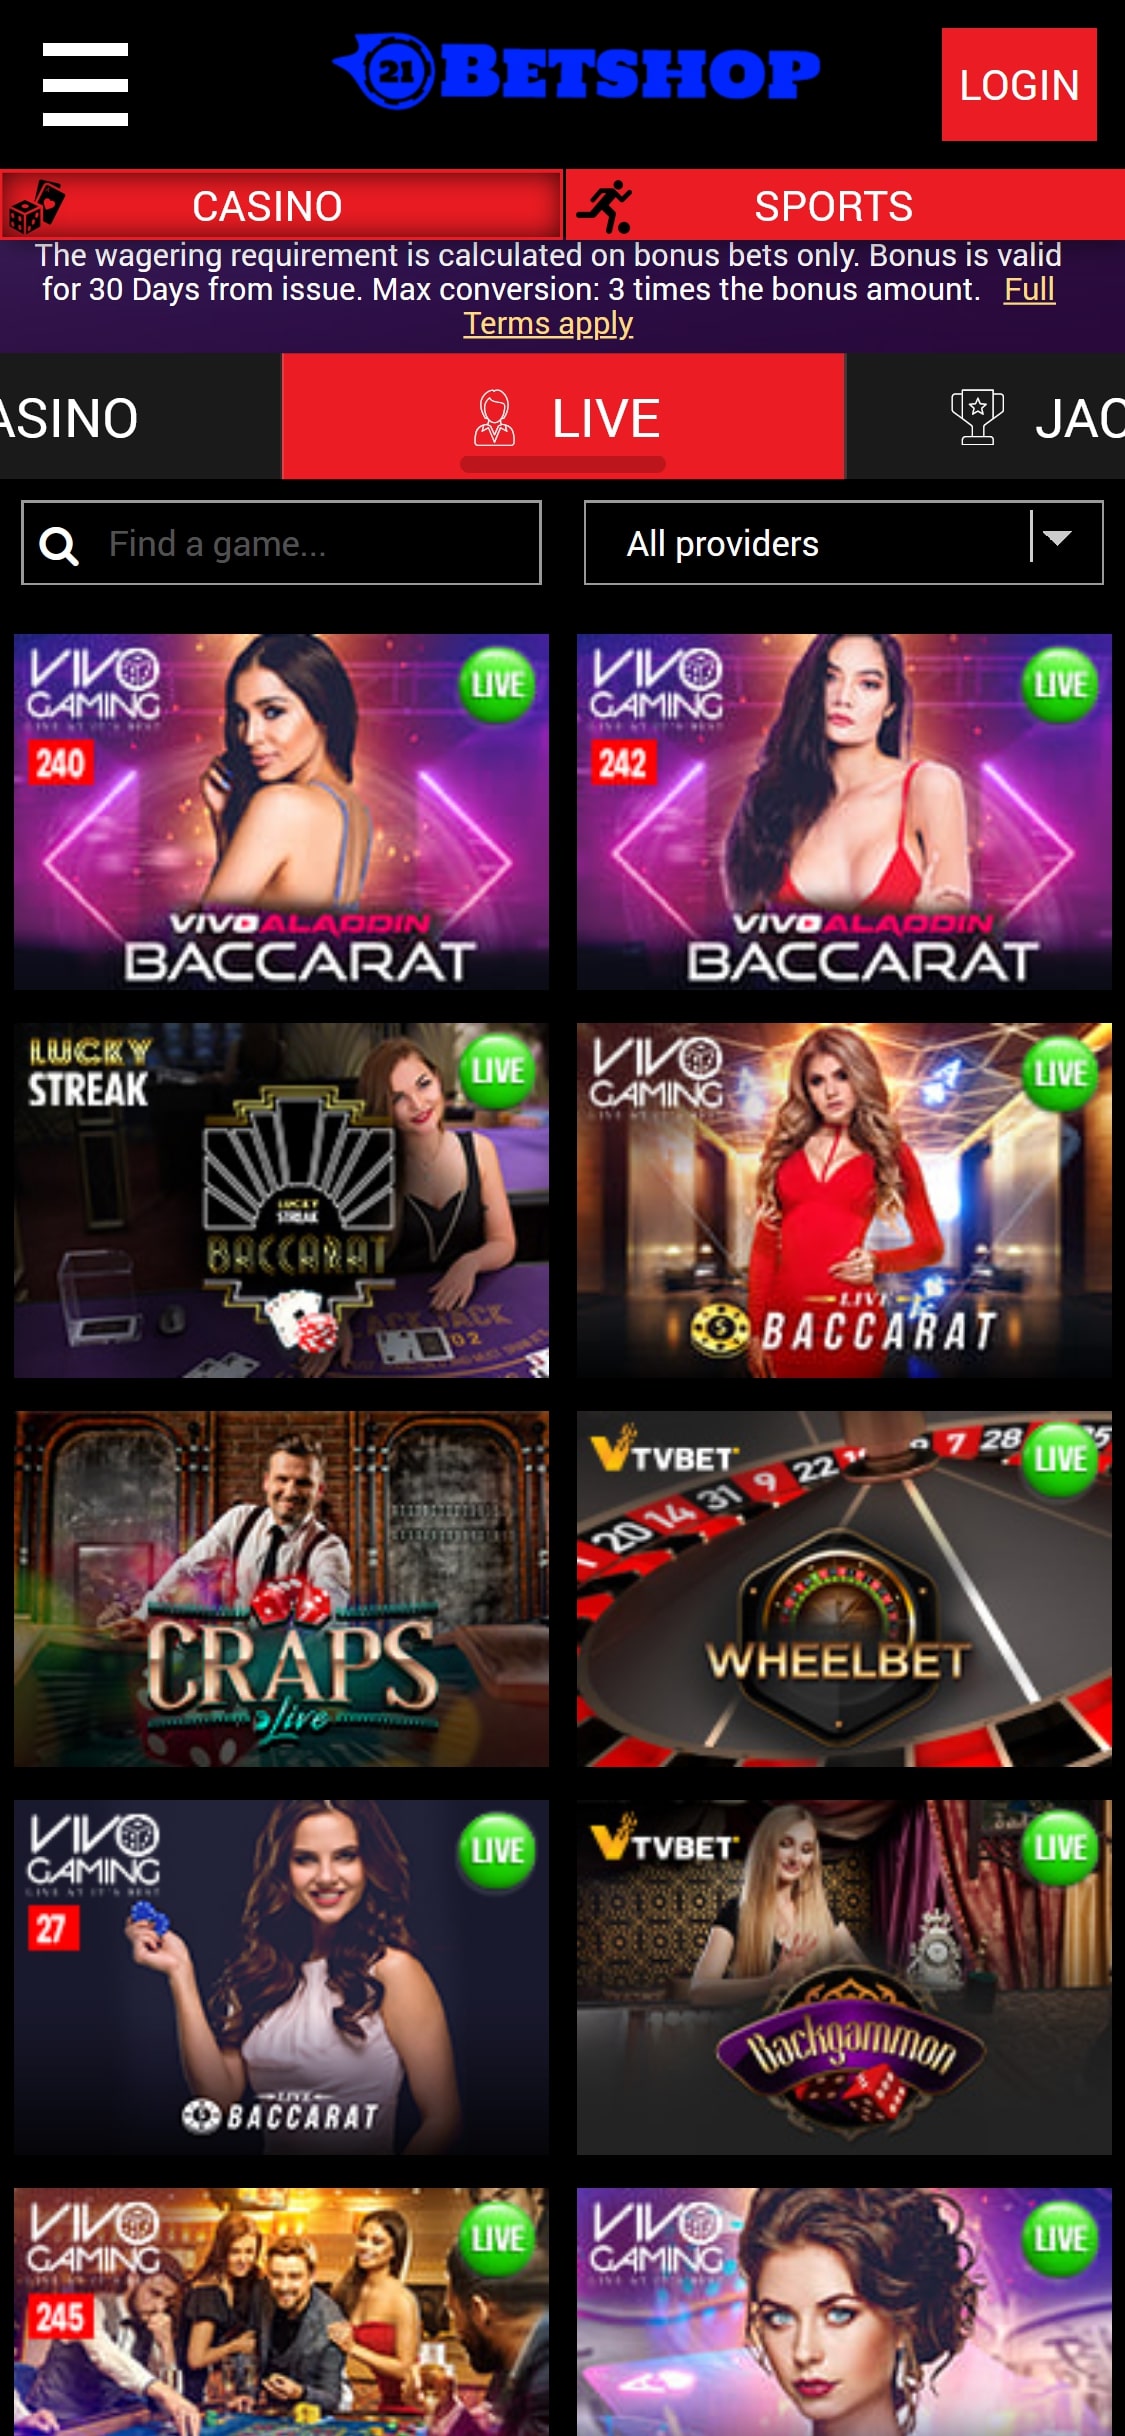 21BetShop Casino Mobile Live Dealer Games Review